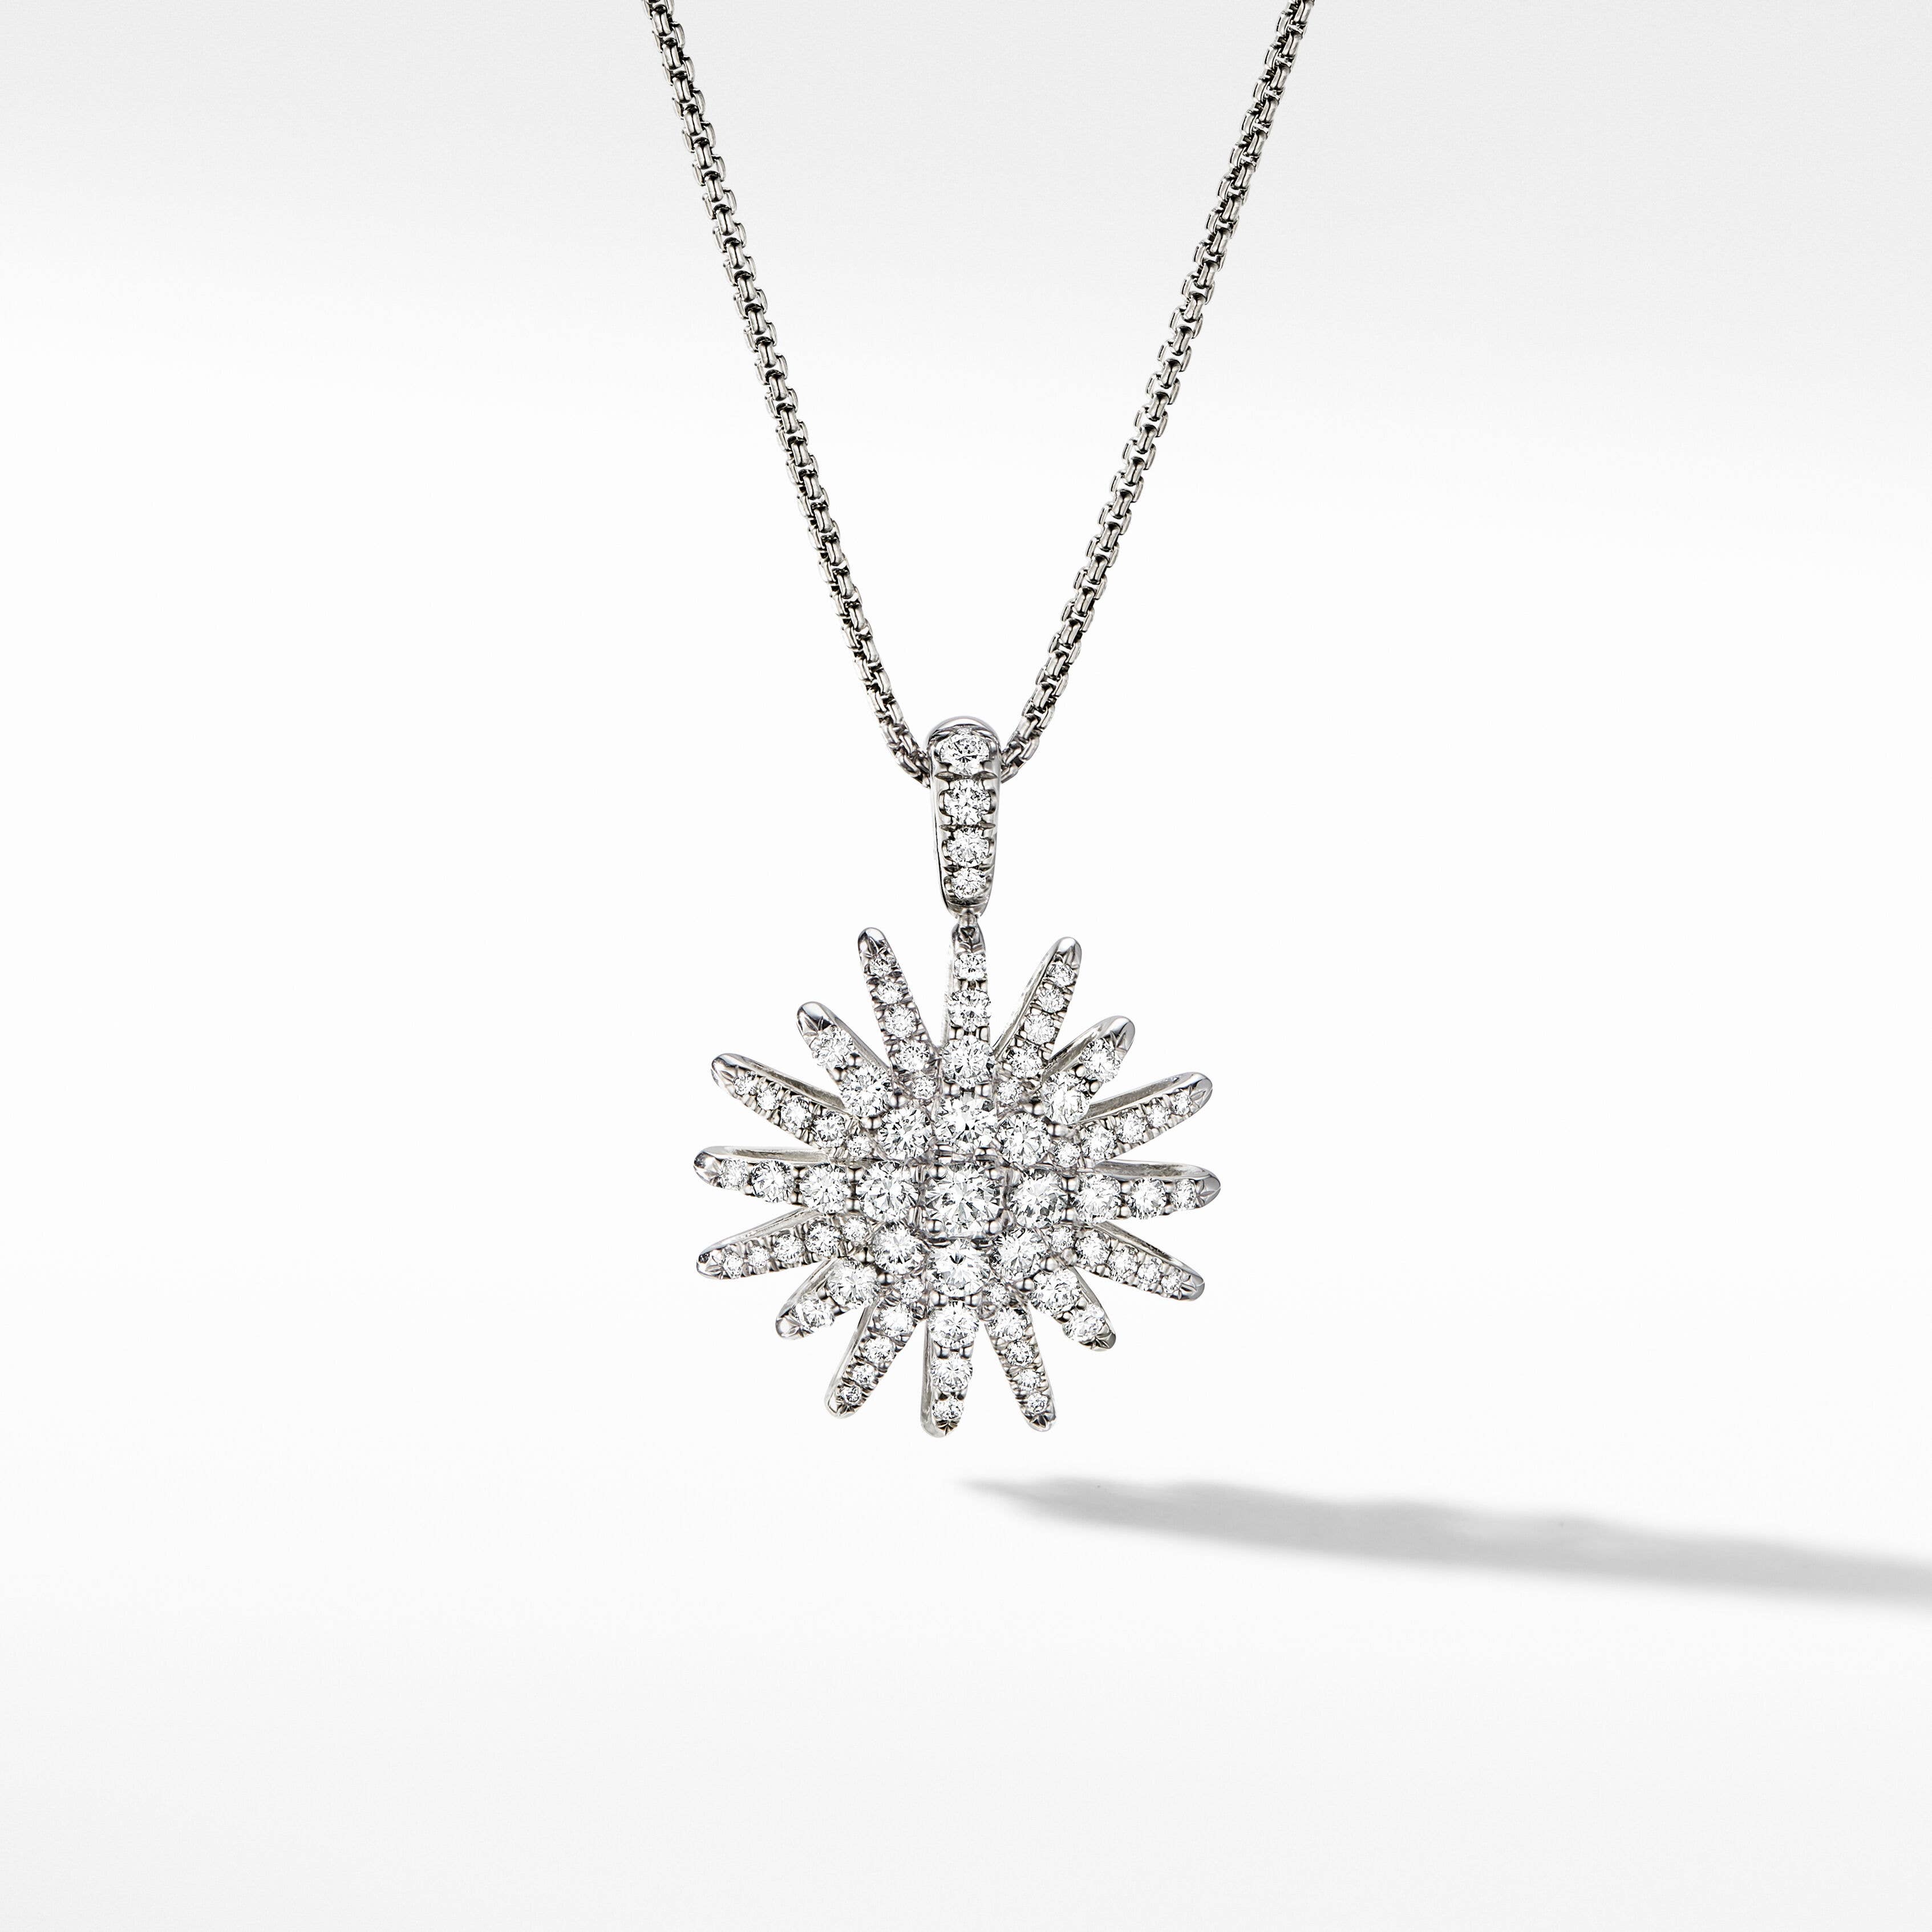 Starburst Pendant Necklace in 18K White Gold with Full Pavé Diamonds